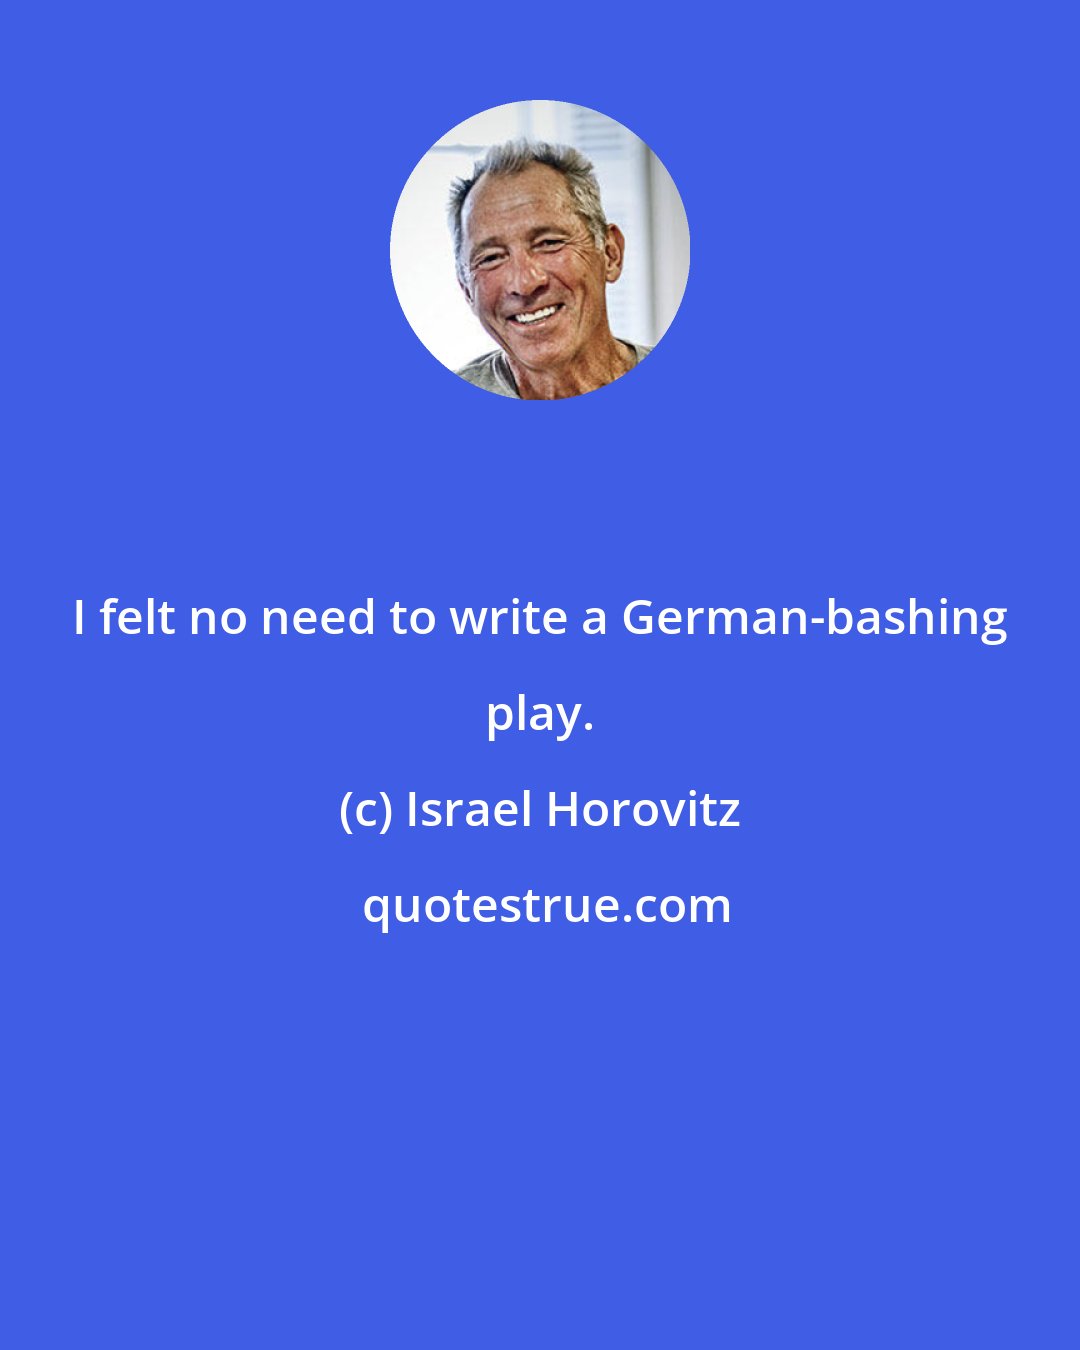 Israel Horovitz: I felt no need to write a German-bashing play.